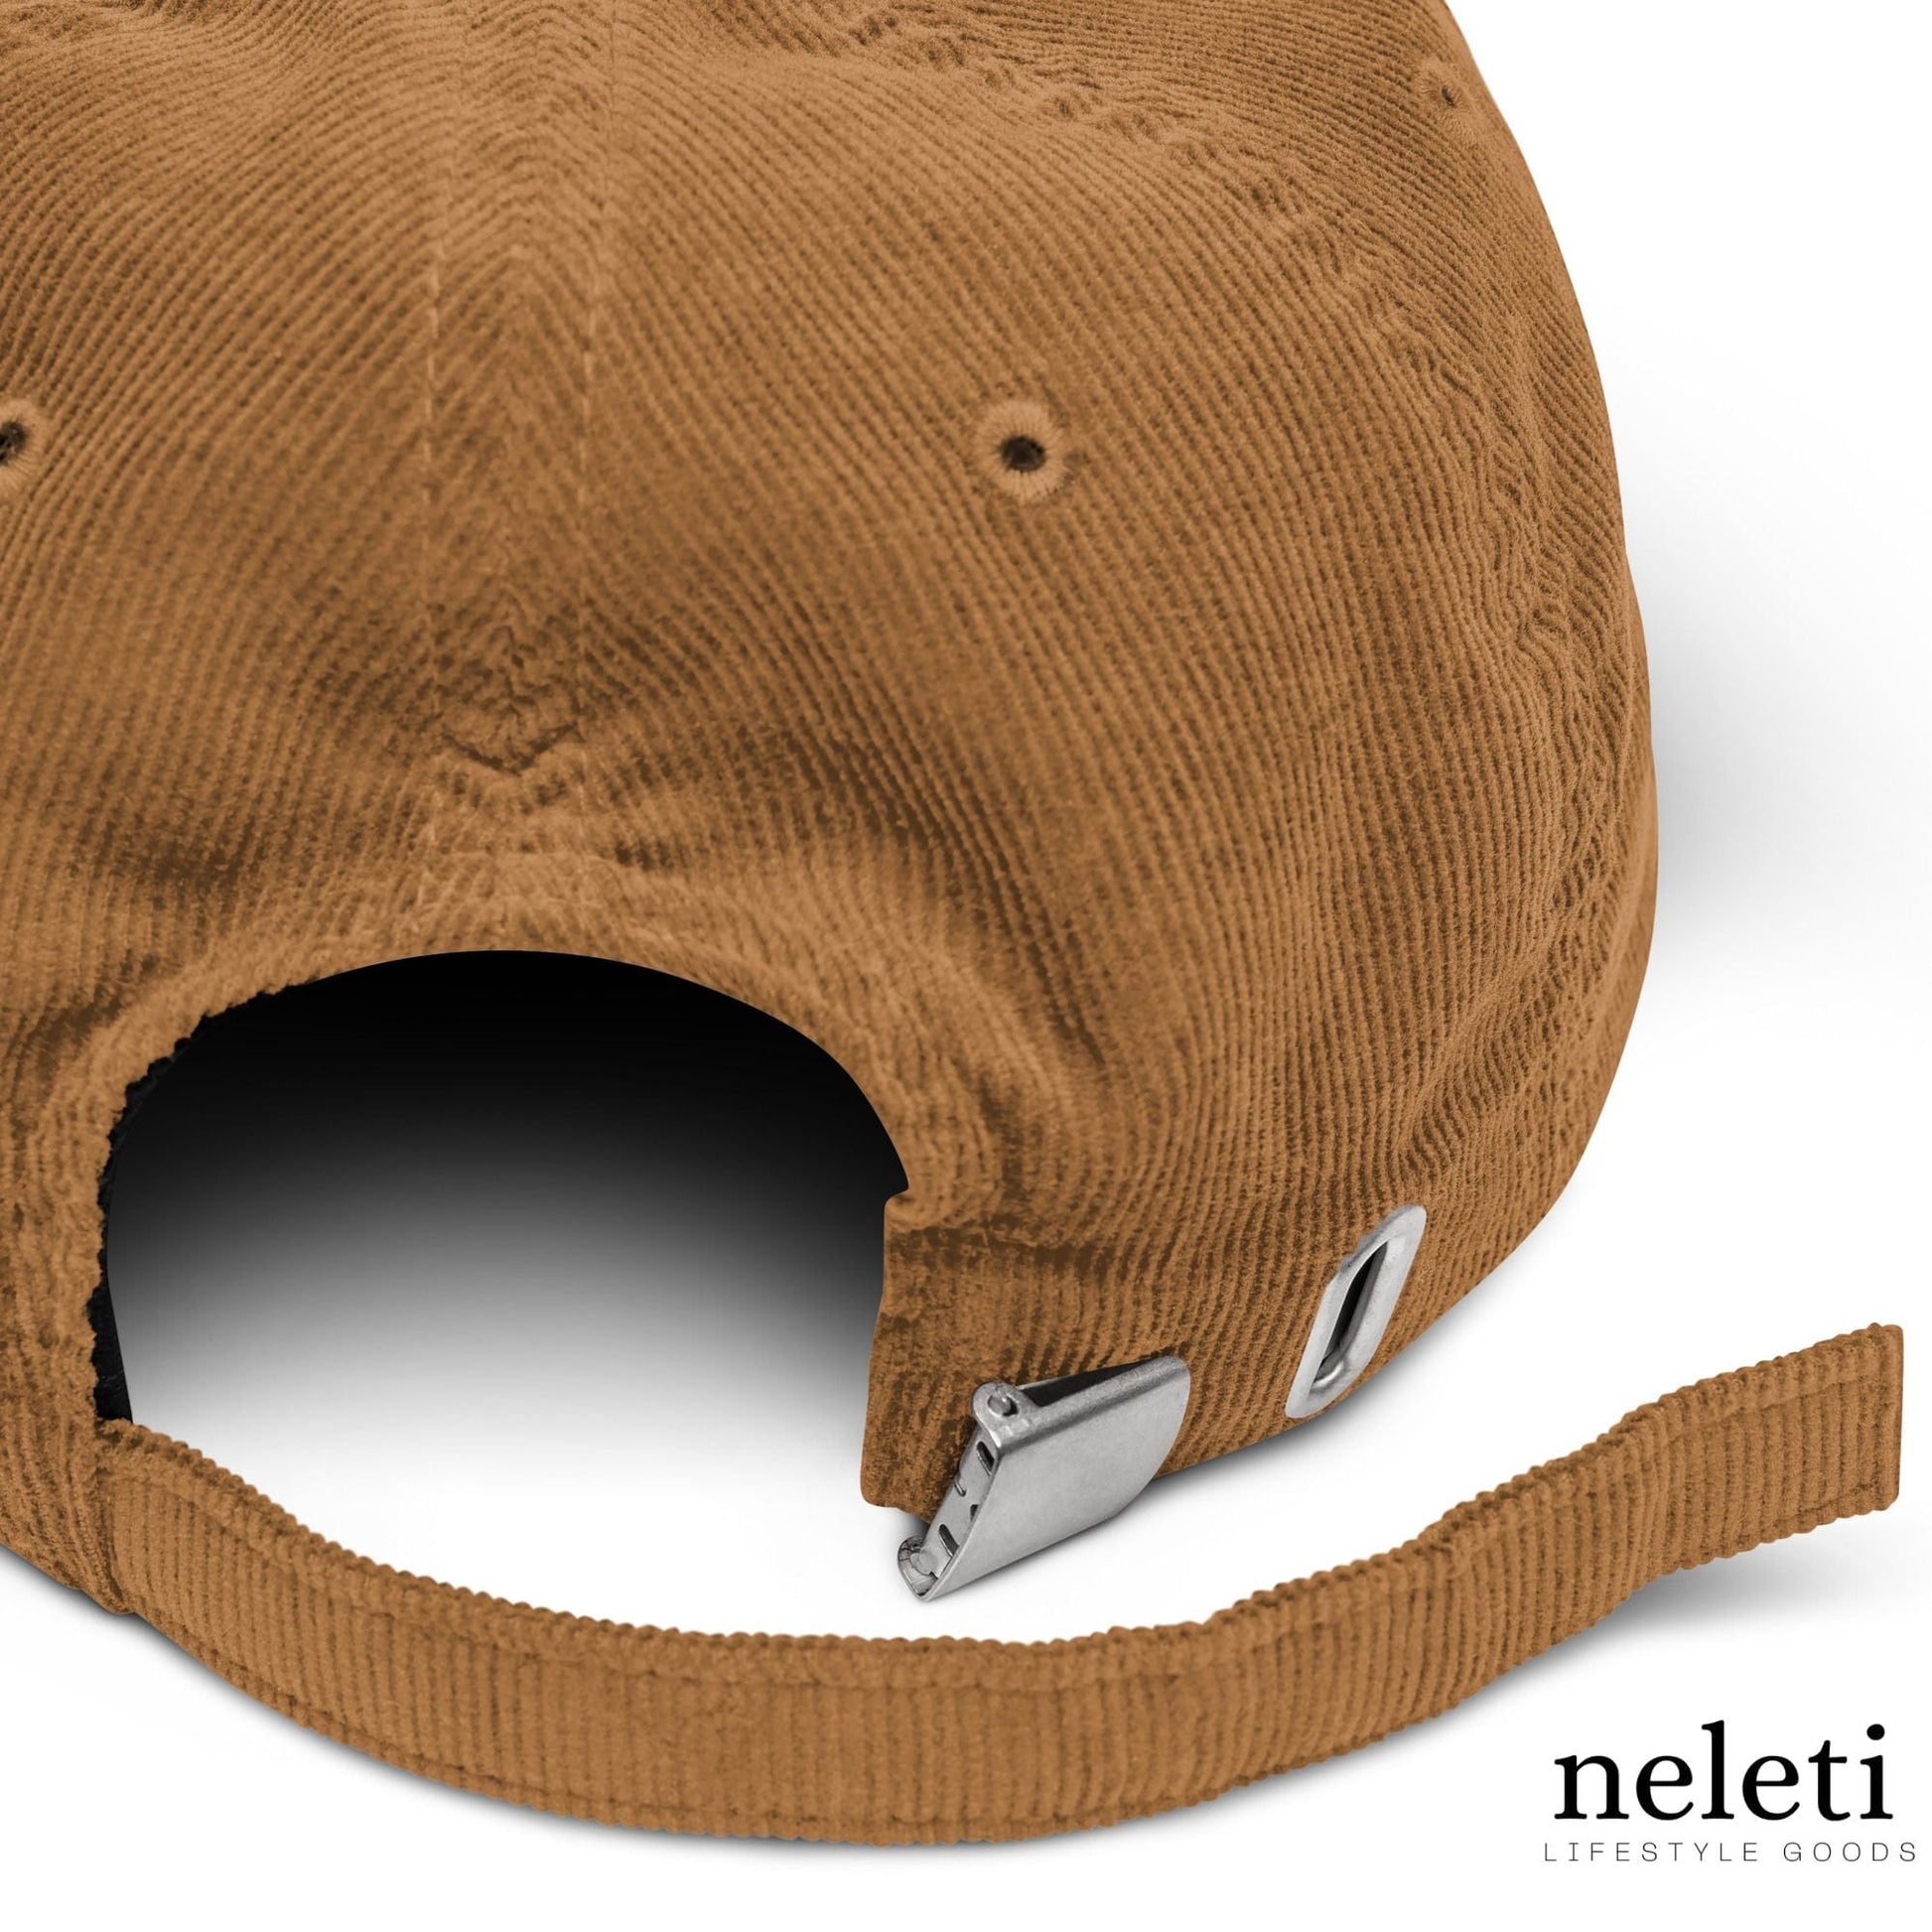    neleti.com-Camel-Corduroy-Hat